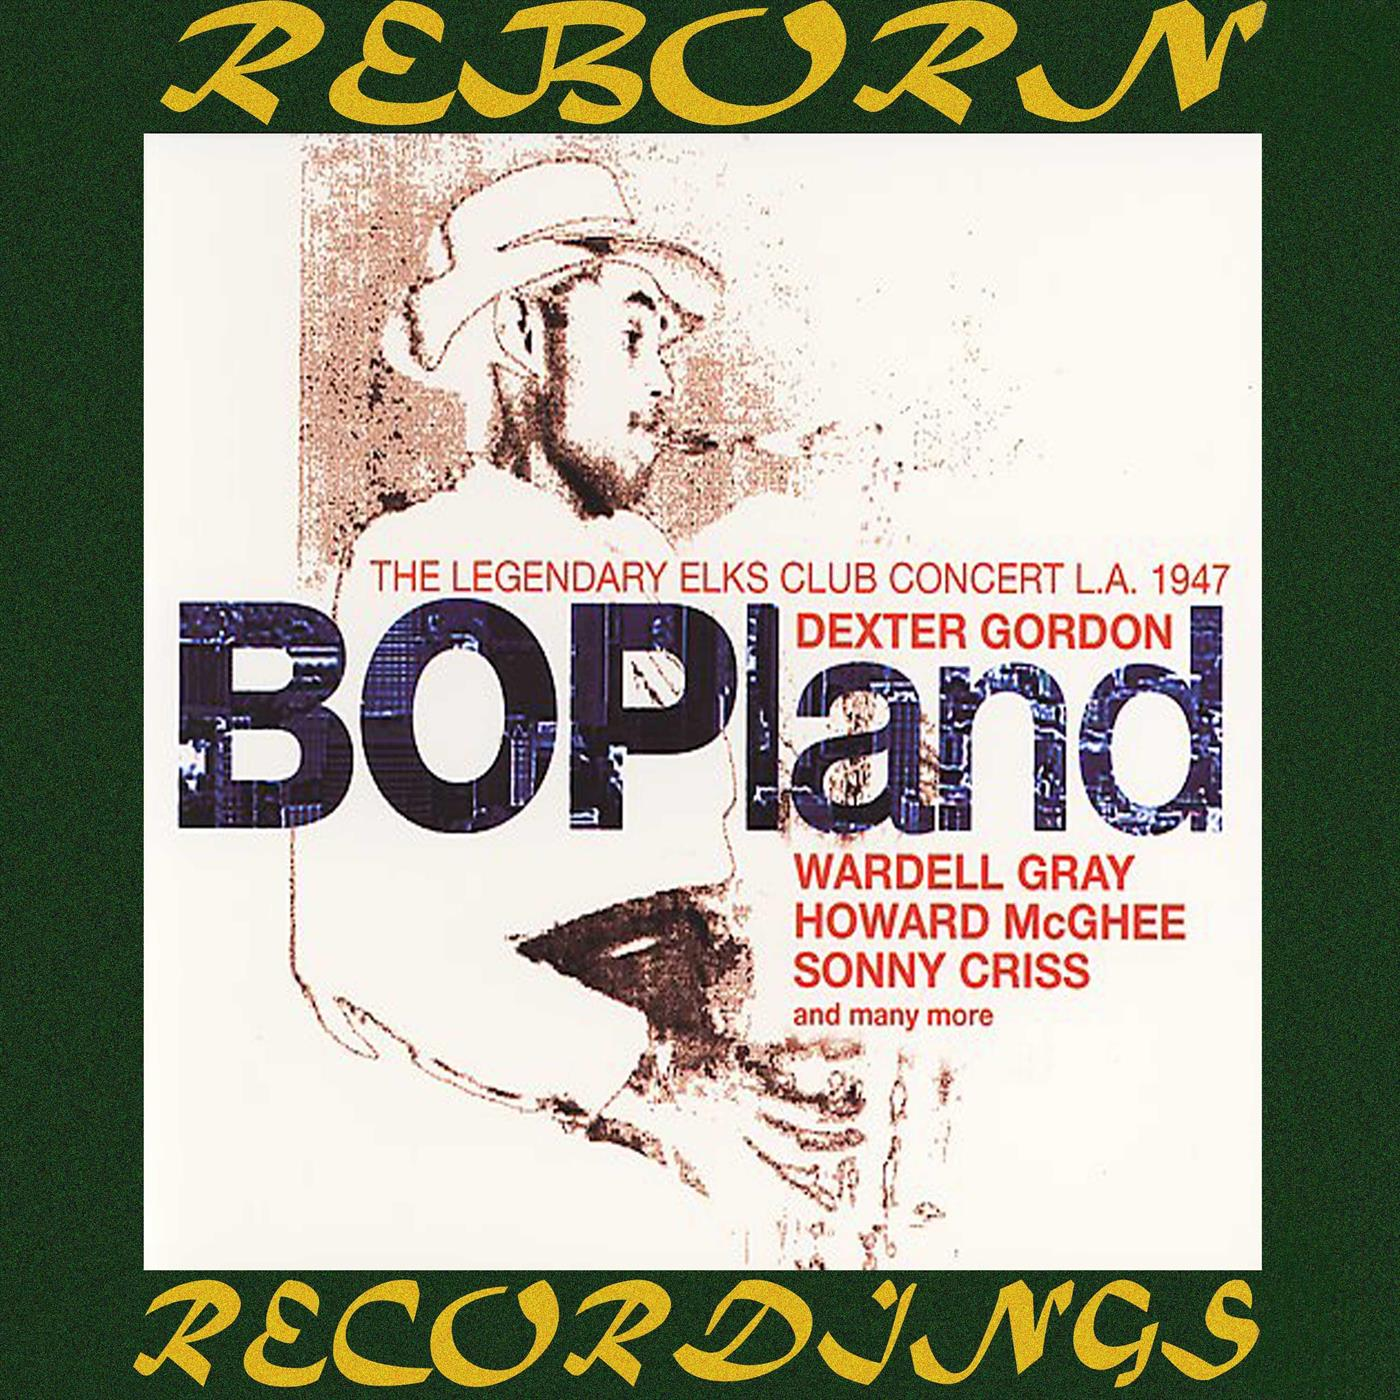 Bopland - The Legendary Elks Club Concert L.A. 1947 (HD Remastered)